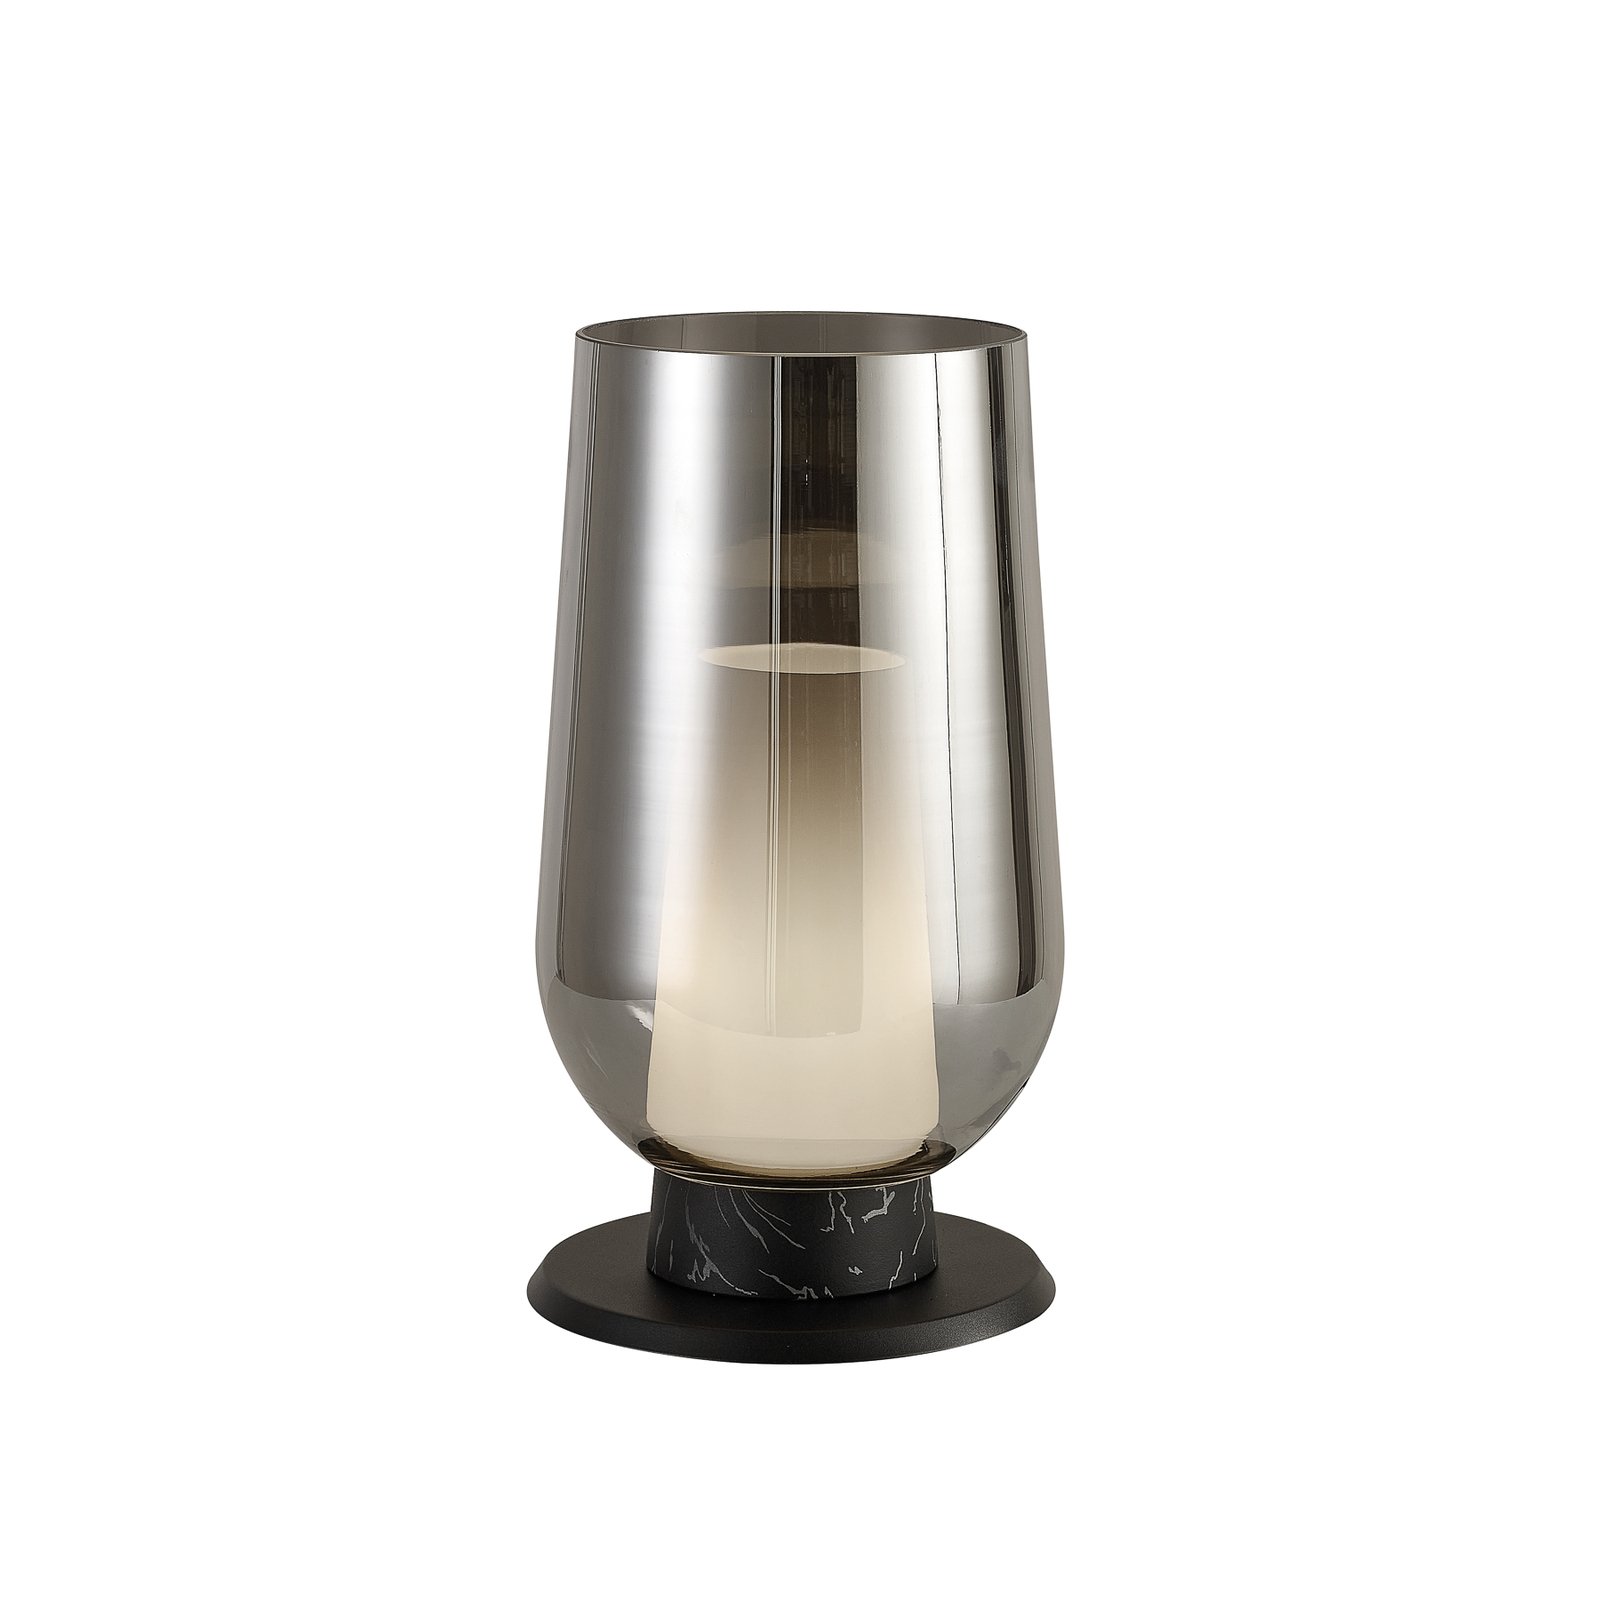 Nora bordlampe, sort-krom, højde 33 cm, glas, metal